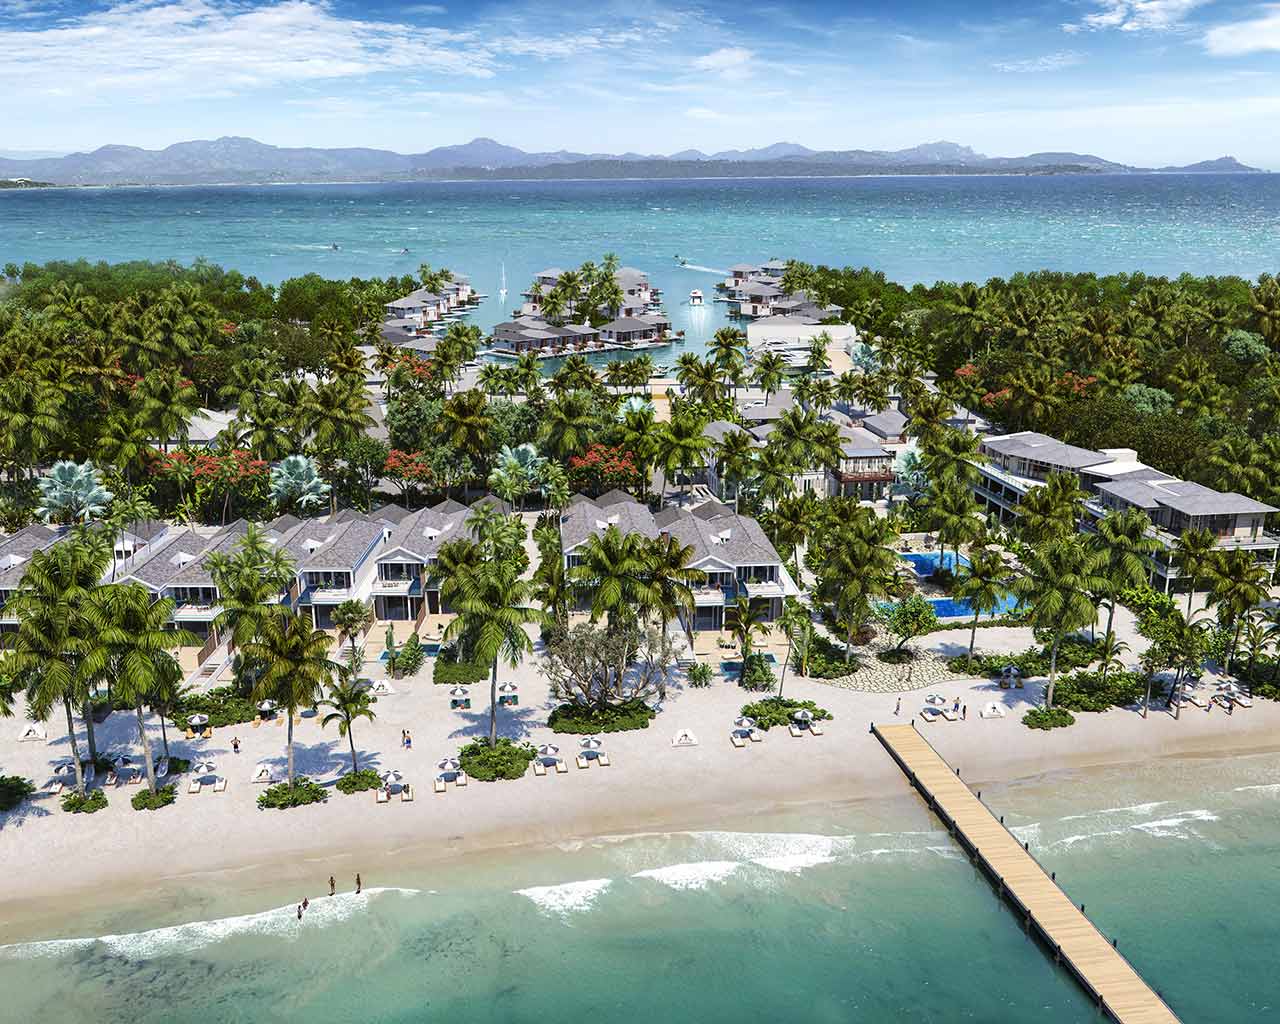 Belize Hotels and Beach Resorts: Itz'ana